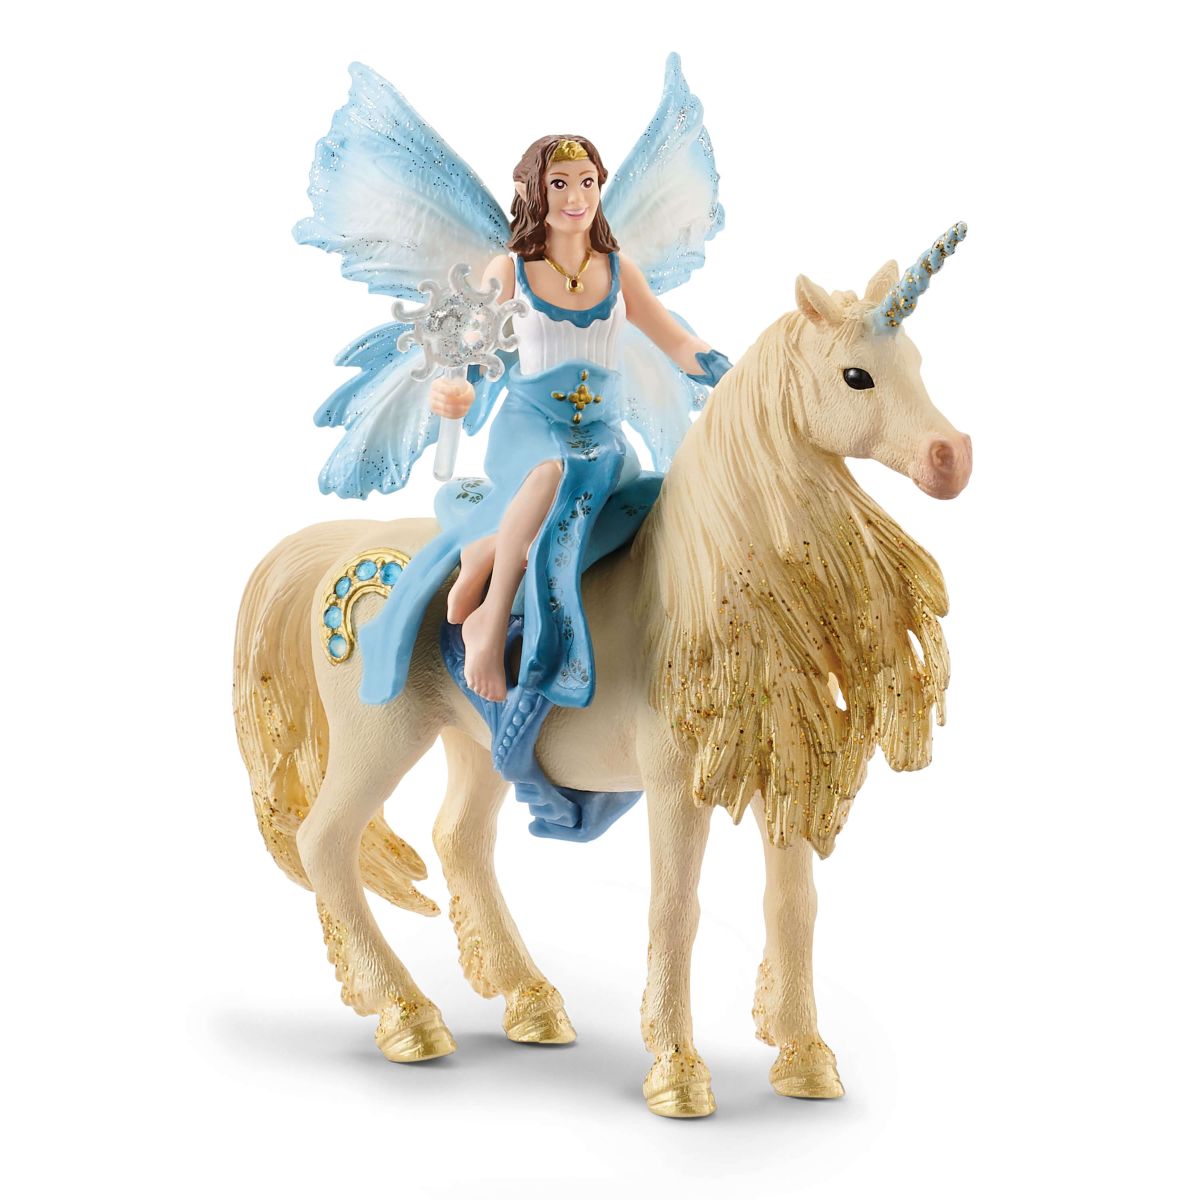 Eyela Riding on Golden Unicorn (Schleich #42508)